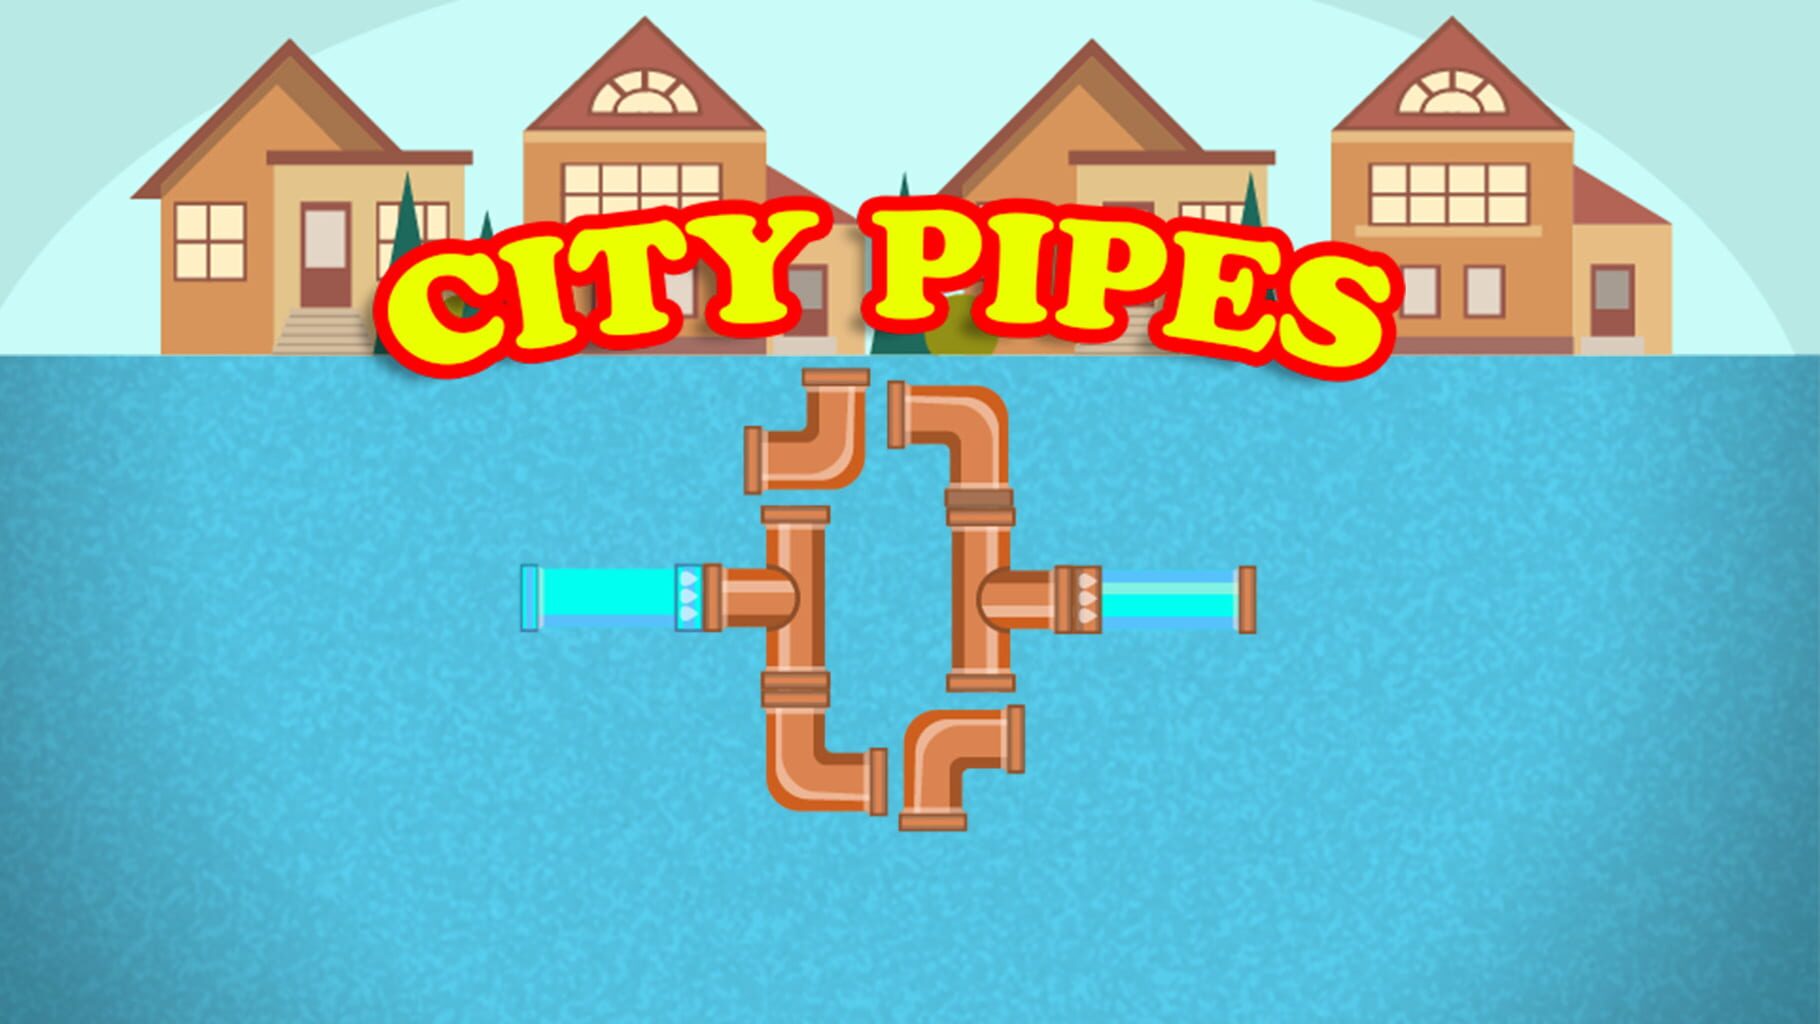 City Pipes artwork